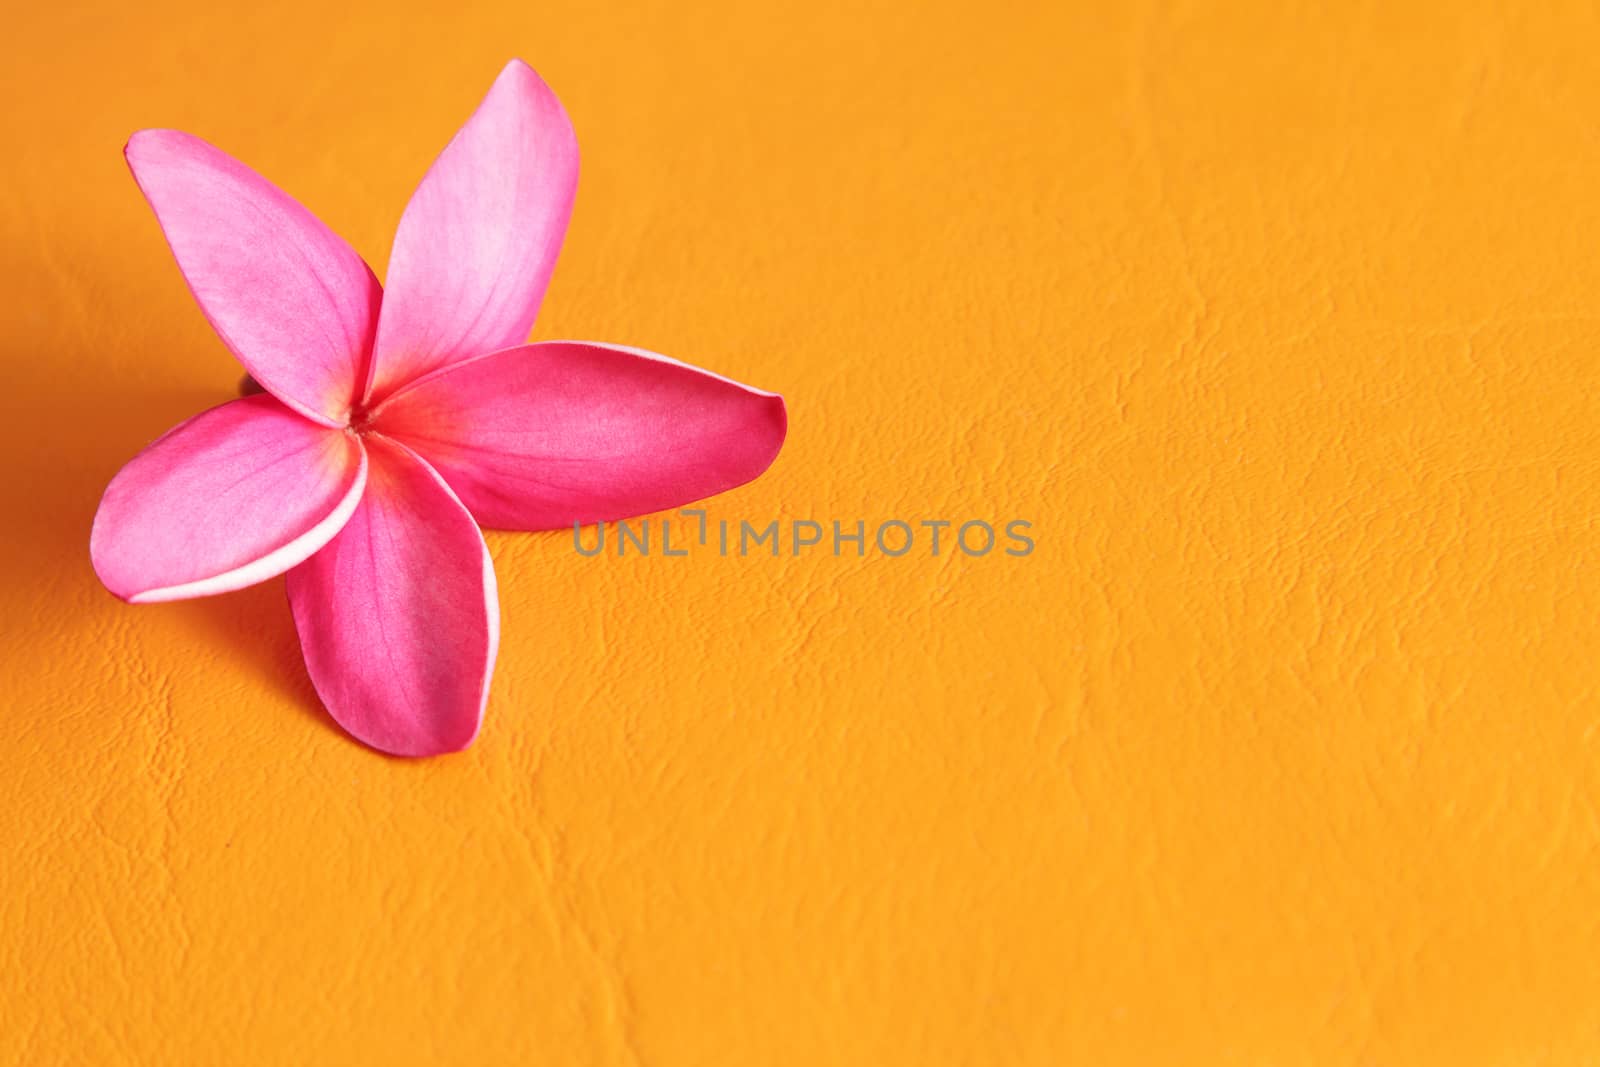 Frangipani on yellow background by foto76